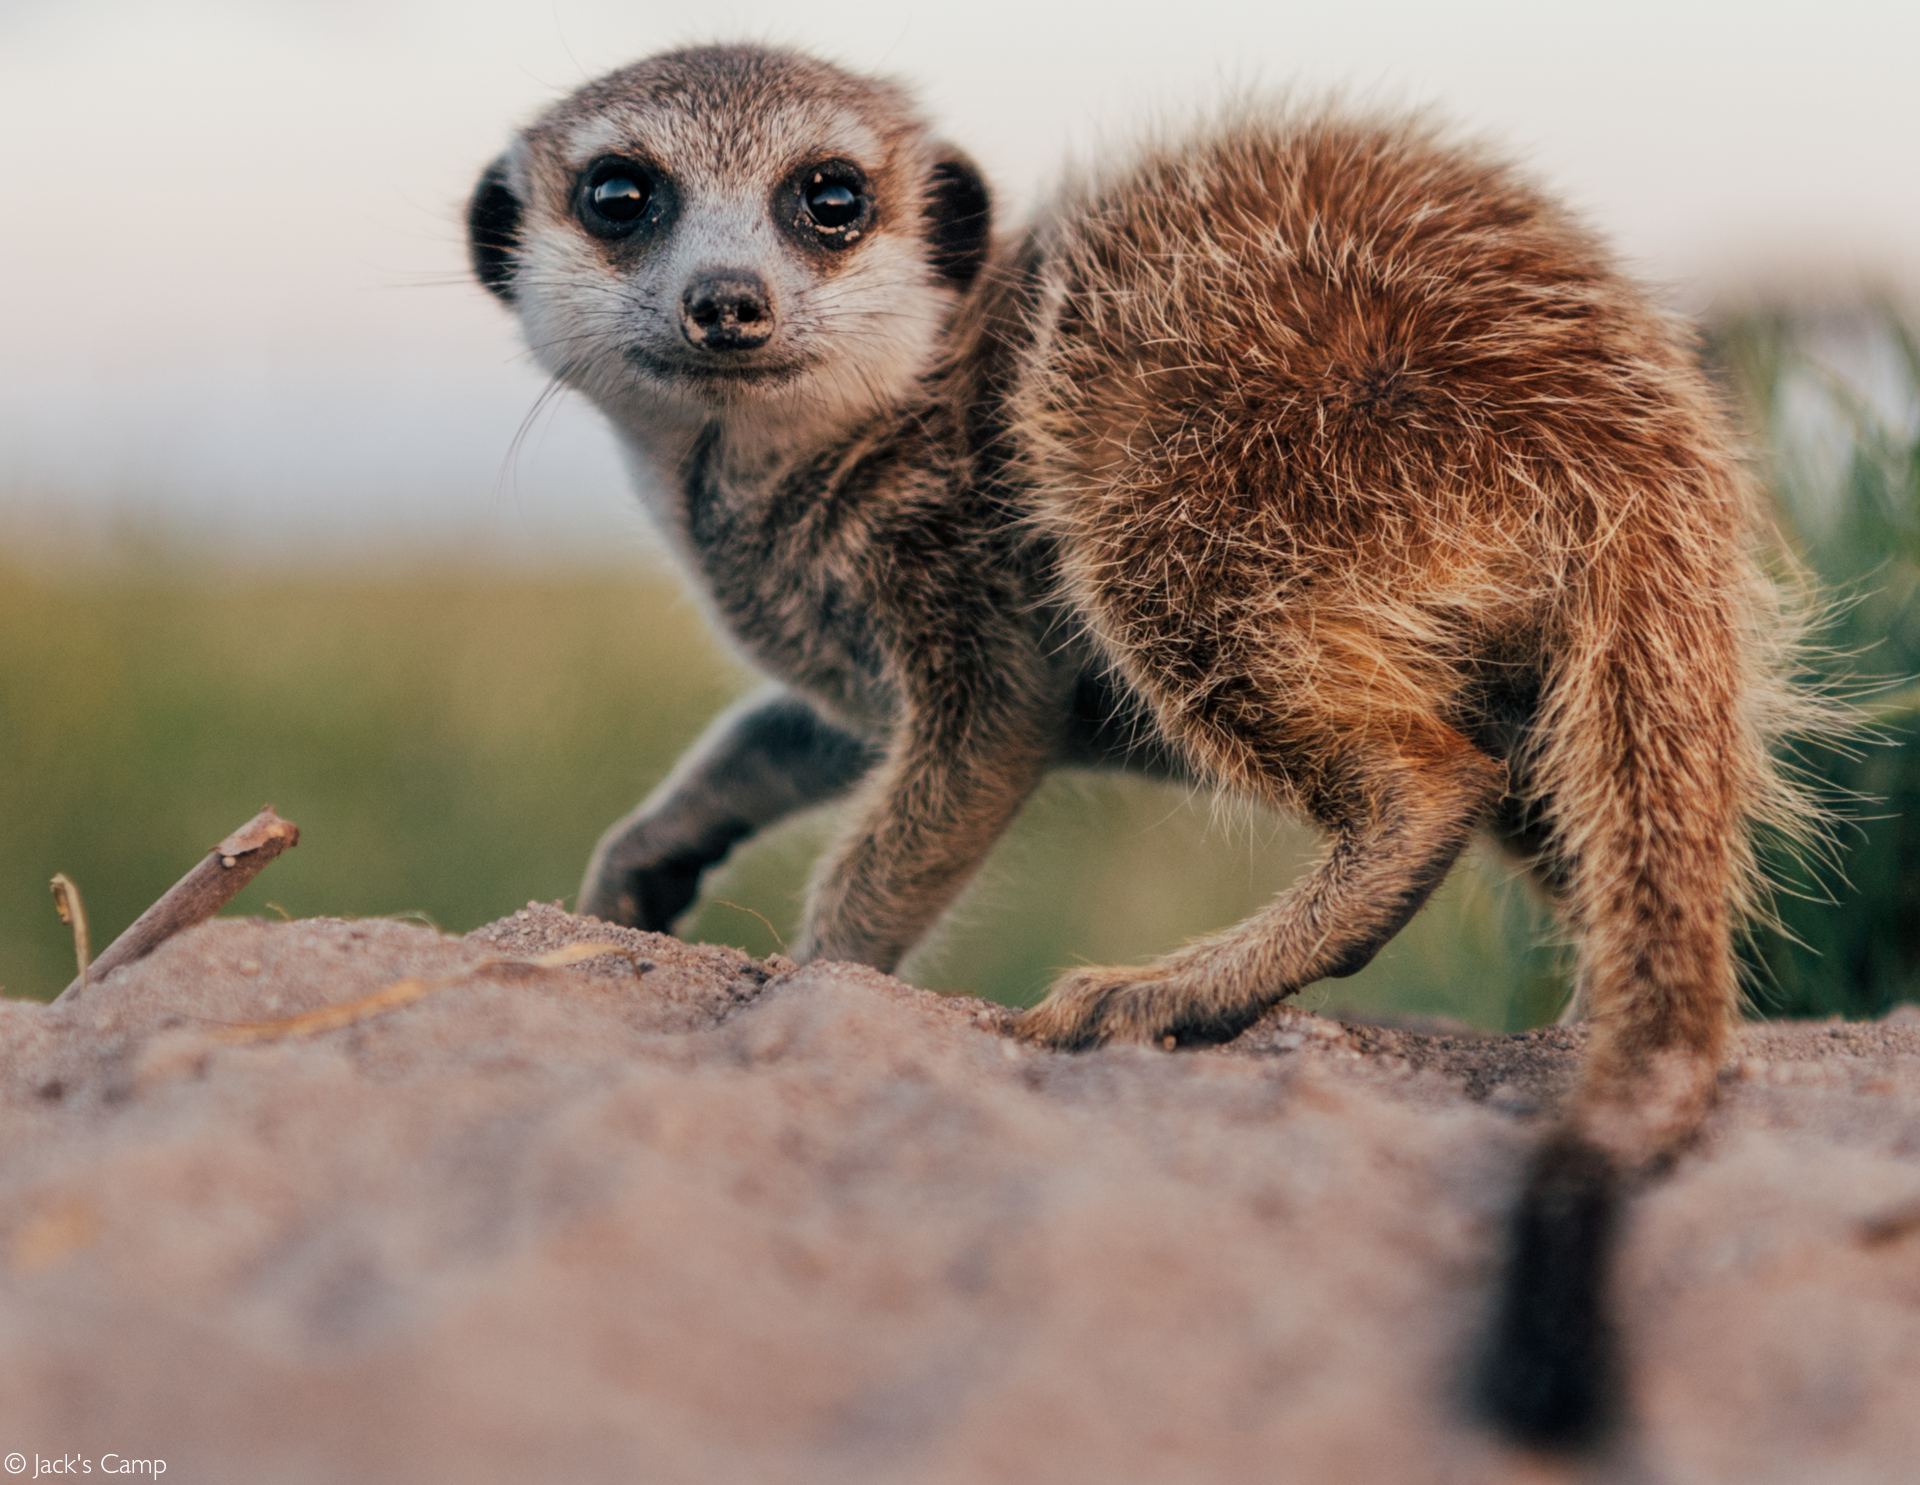 Marvellous meerkats - mongooses of the desert - Africa Geographic